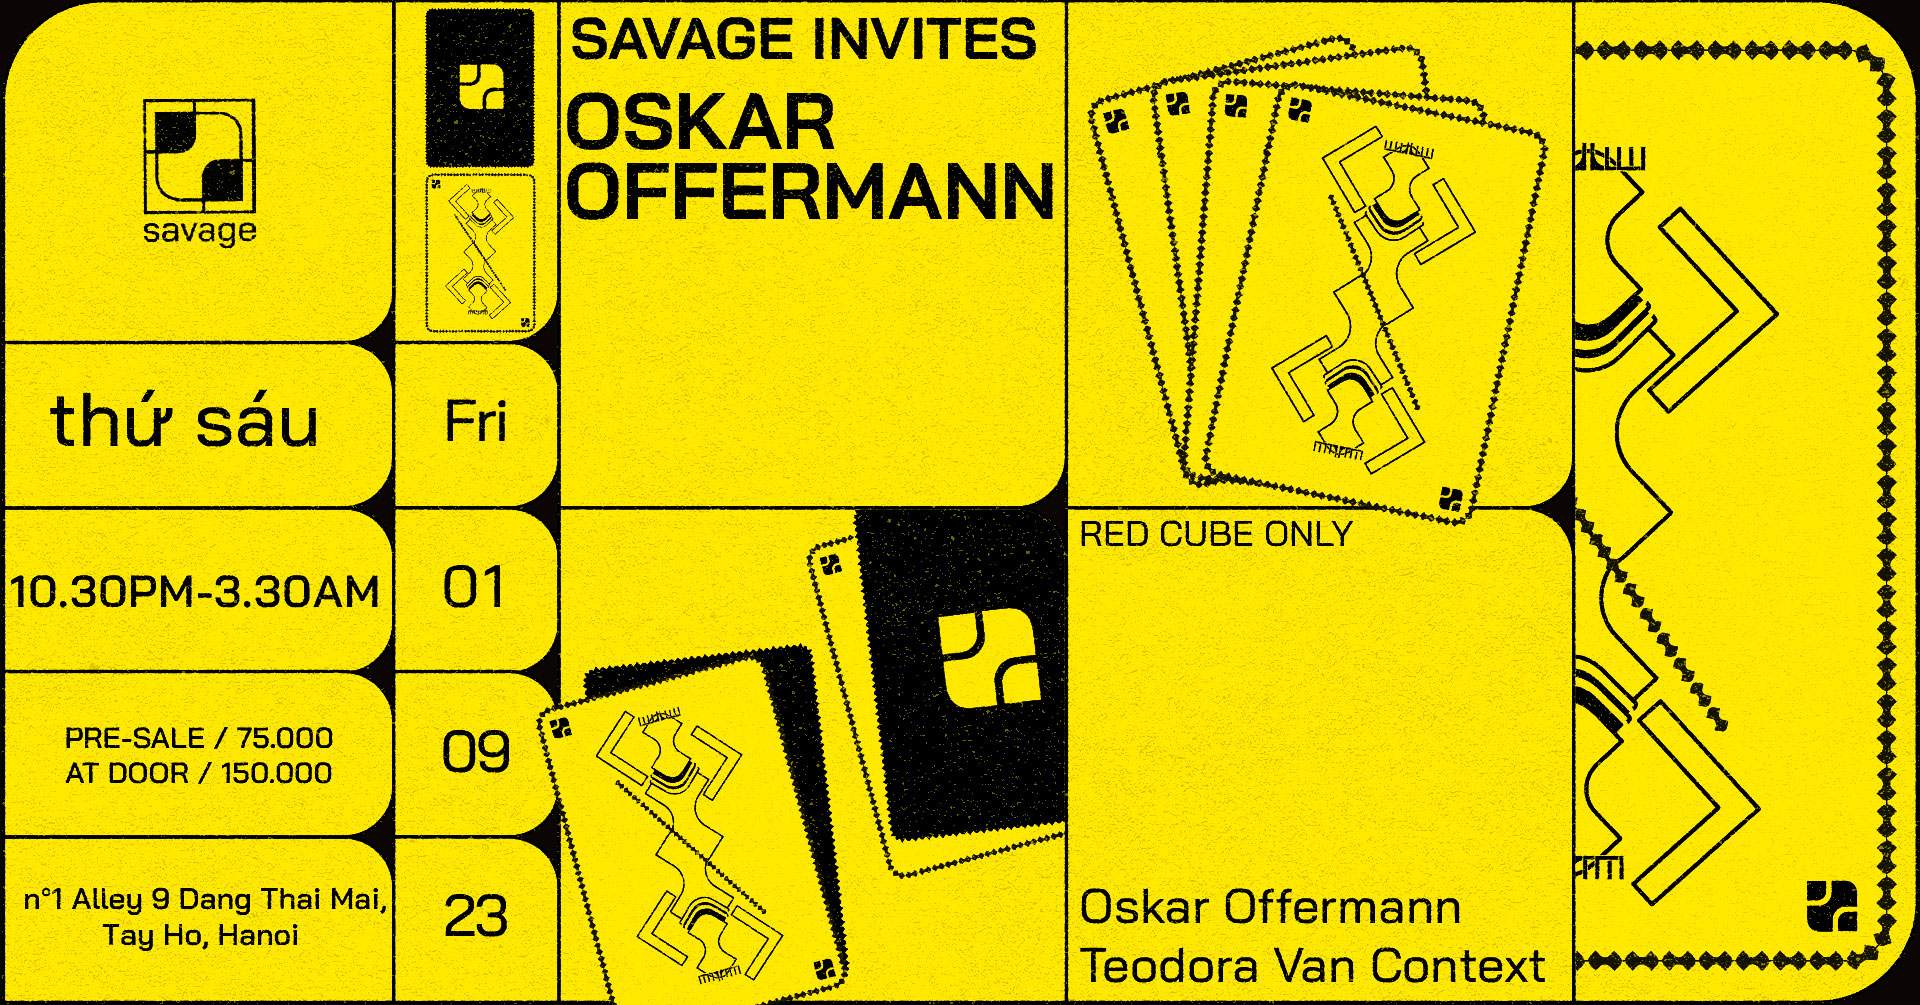 Savage Invites Oskar Offermann - フライヤー裏